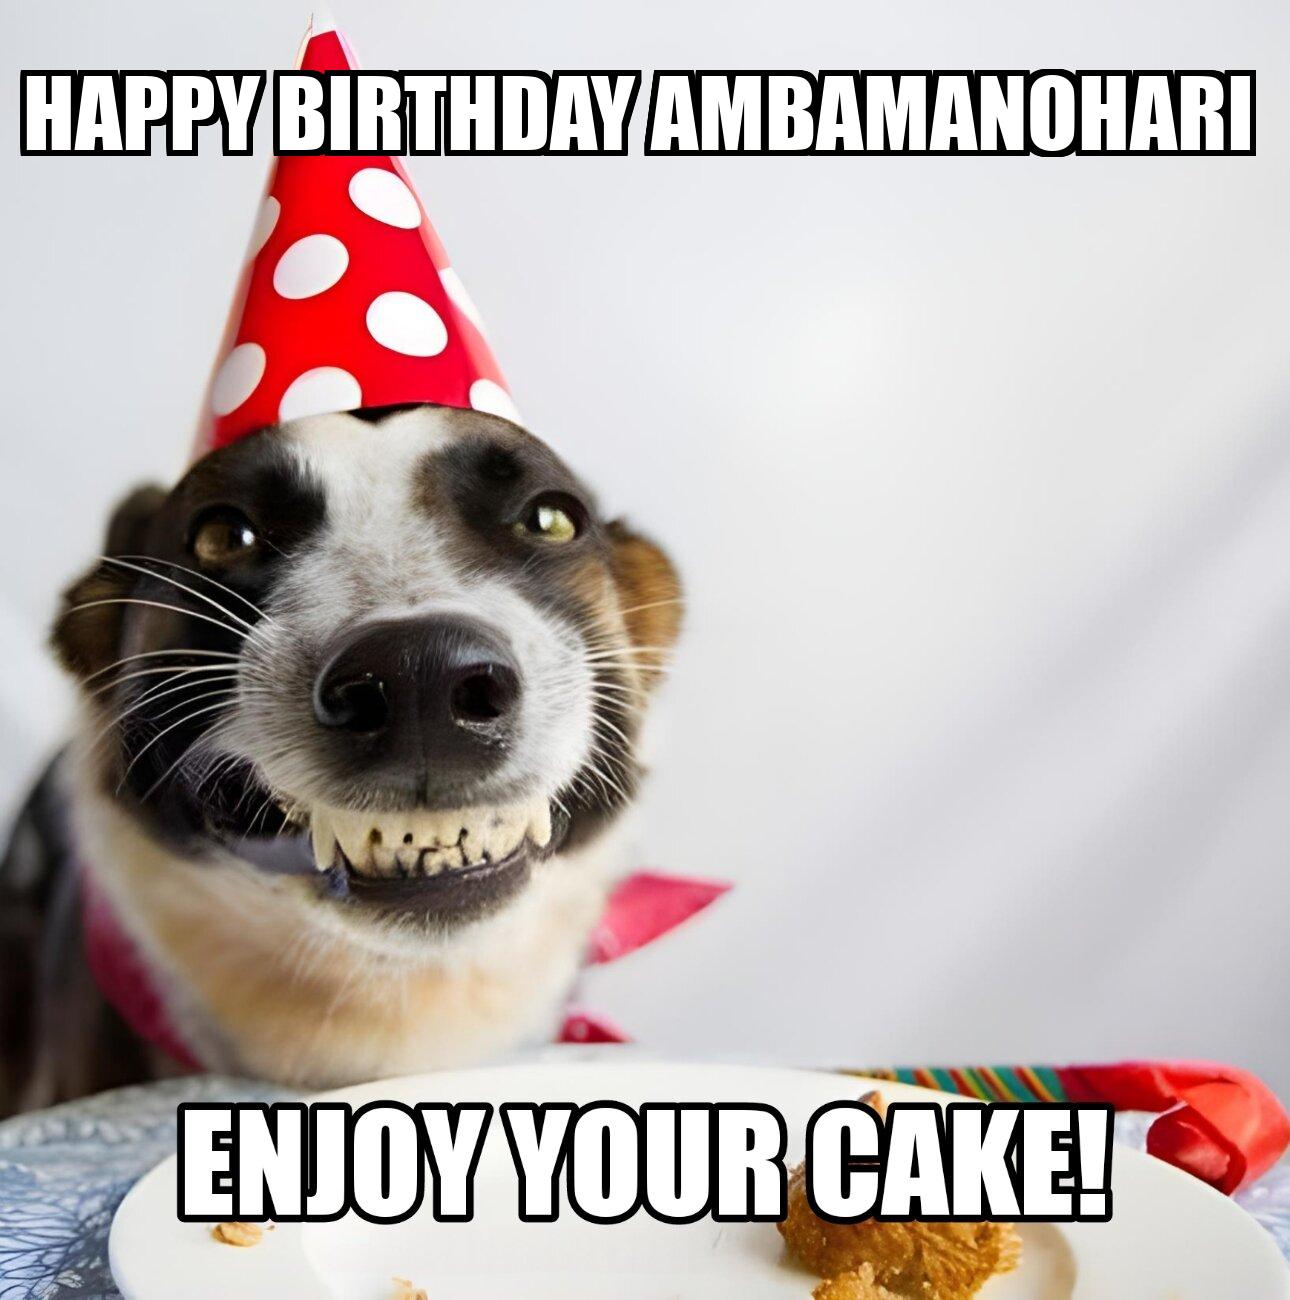 Happy Birthday Ambamanohari Enjoy Your Cake Dog Meme